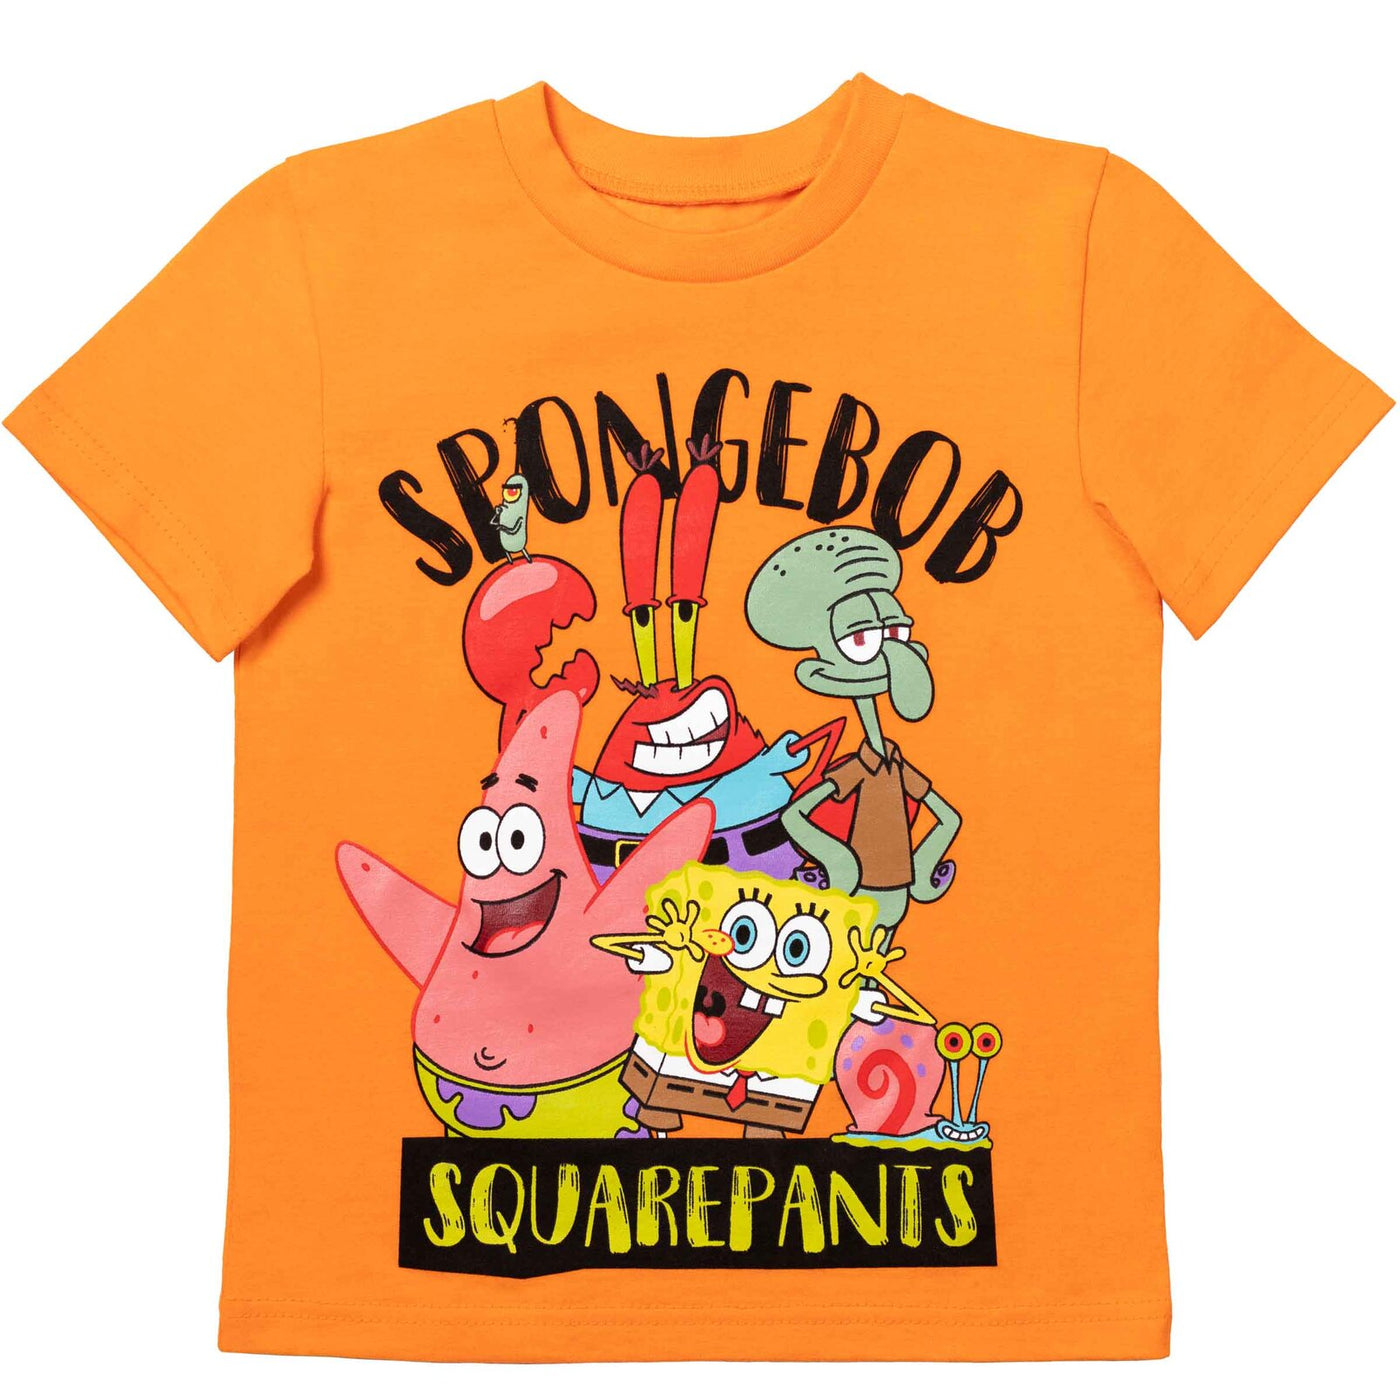 SpongeBob SquarePants T-Shirt and Shorts Outfit Set